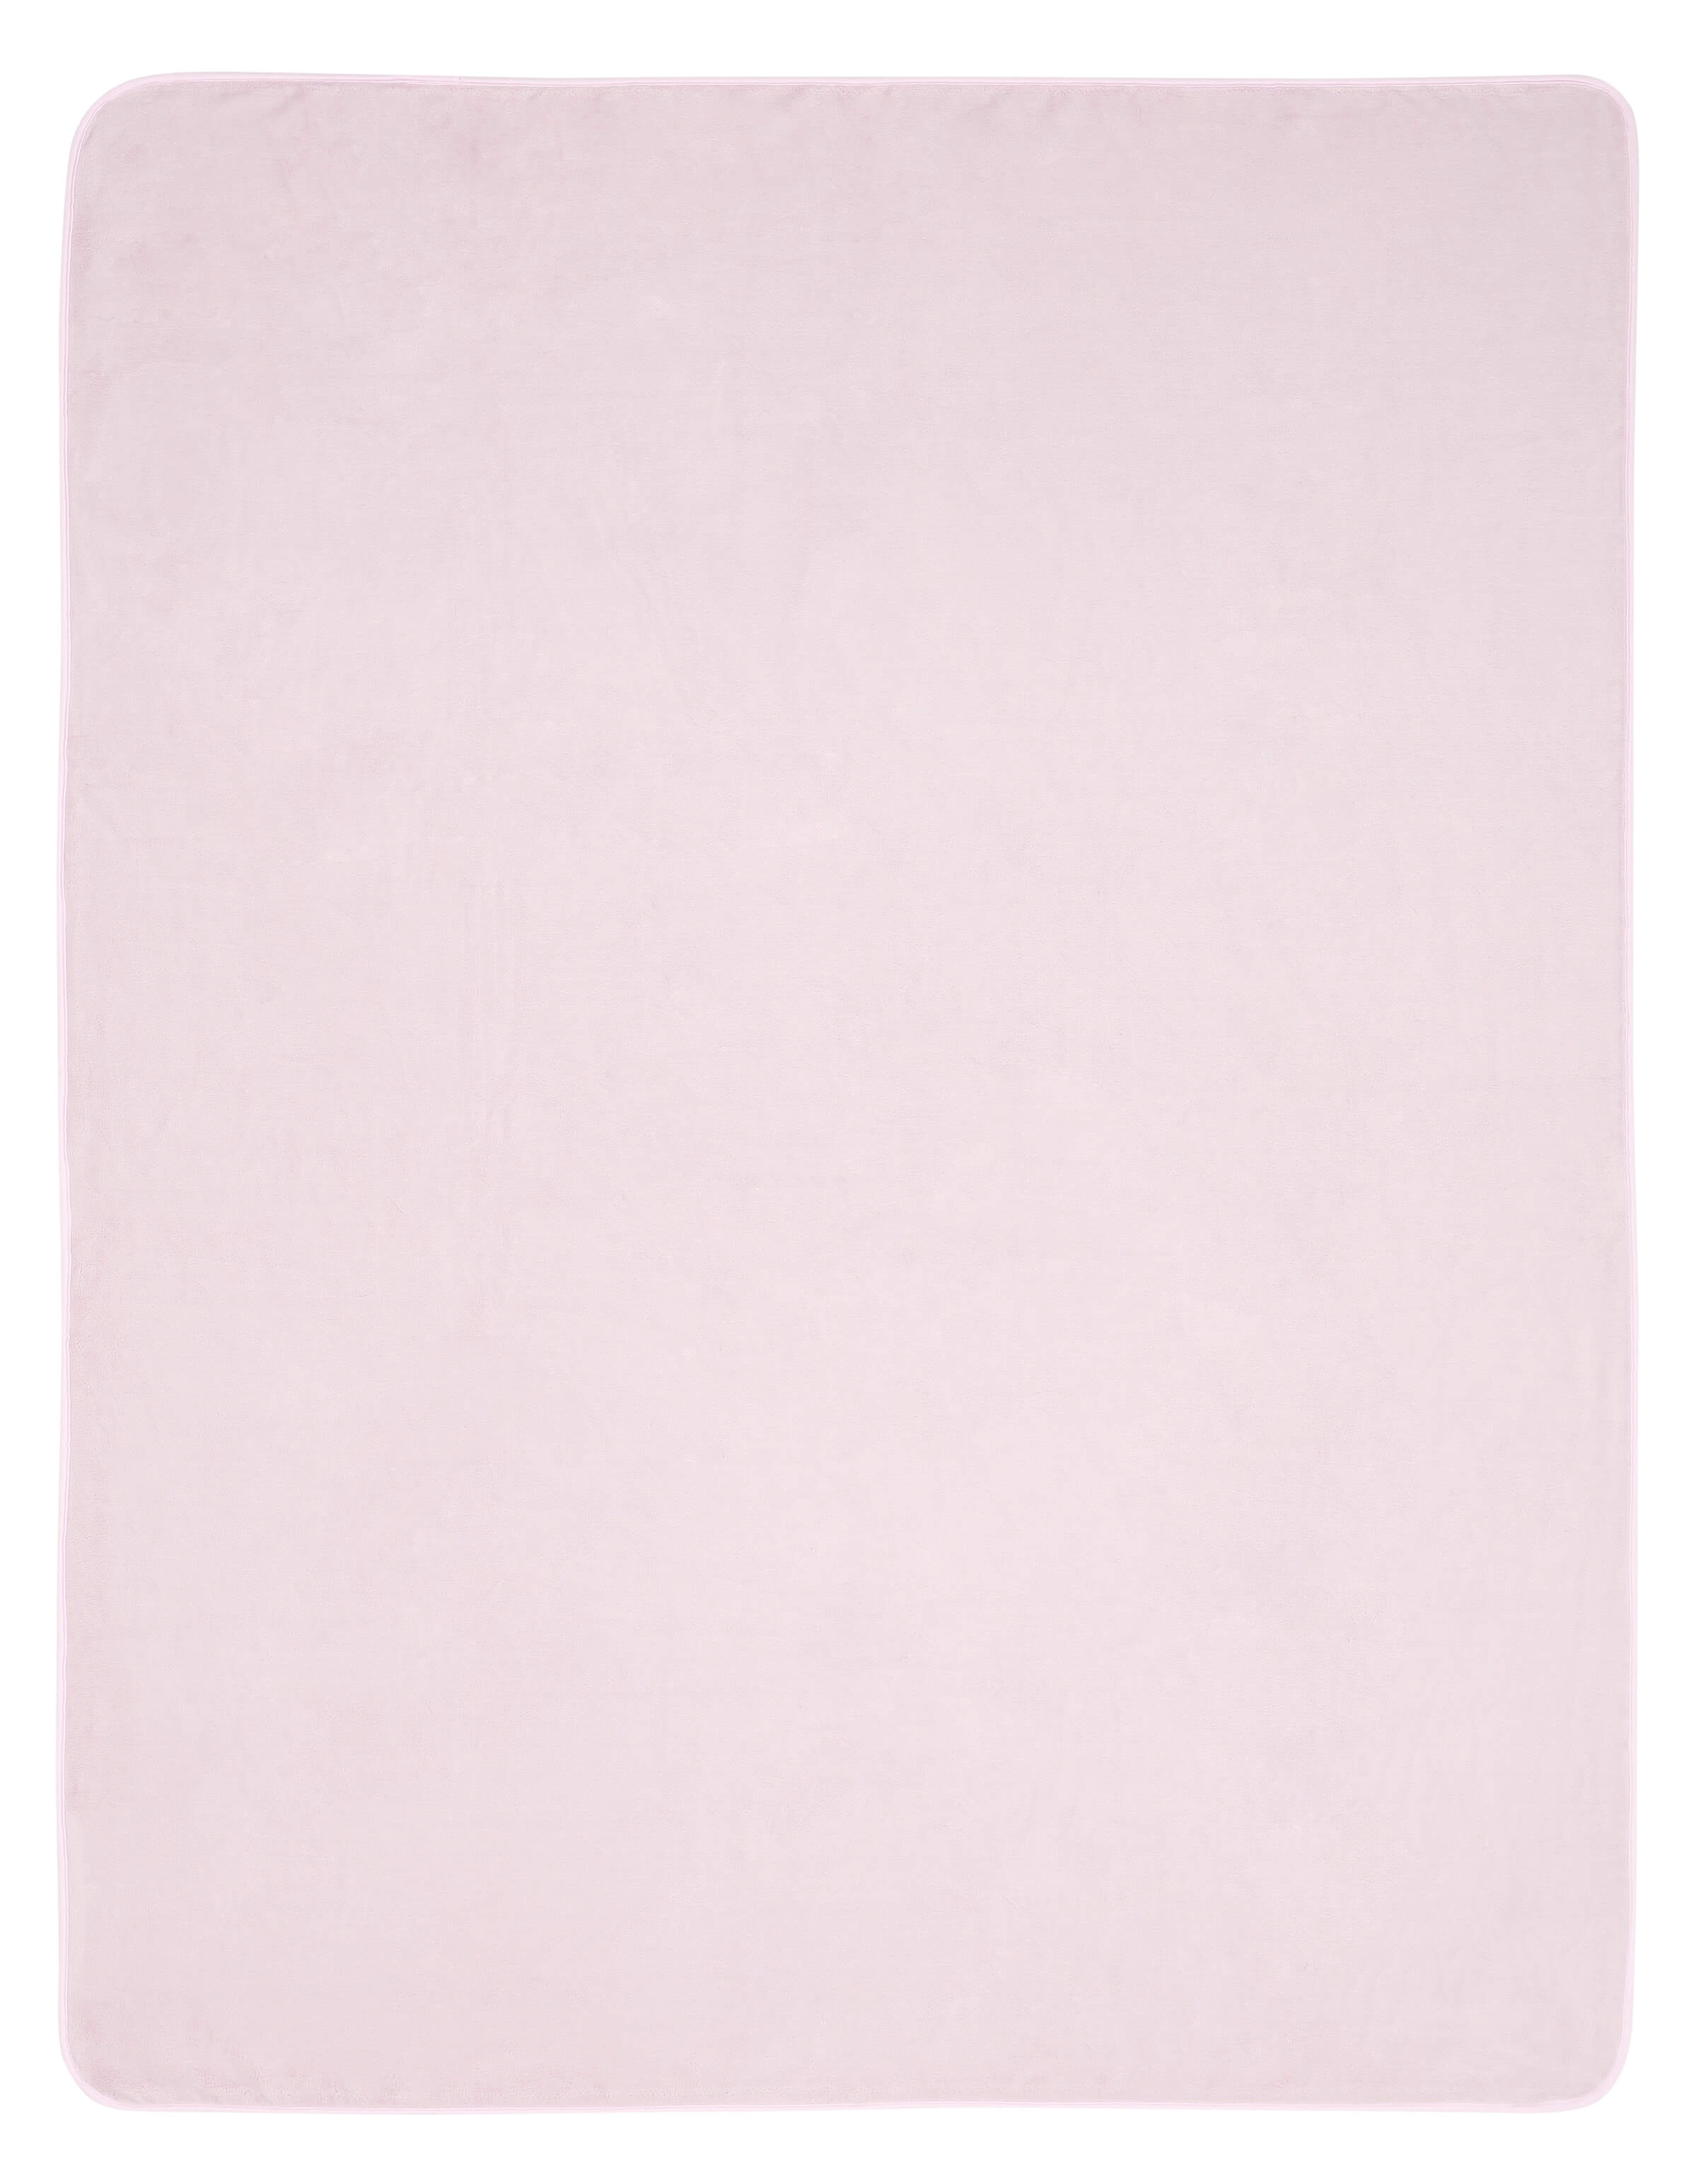 Покрывало Pure Soft Rose ☞ Размер: 220 x 240 см